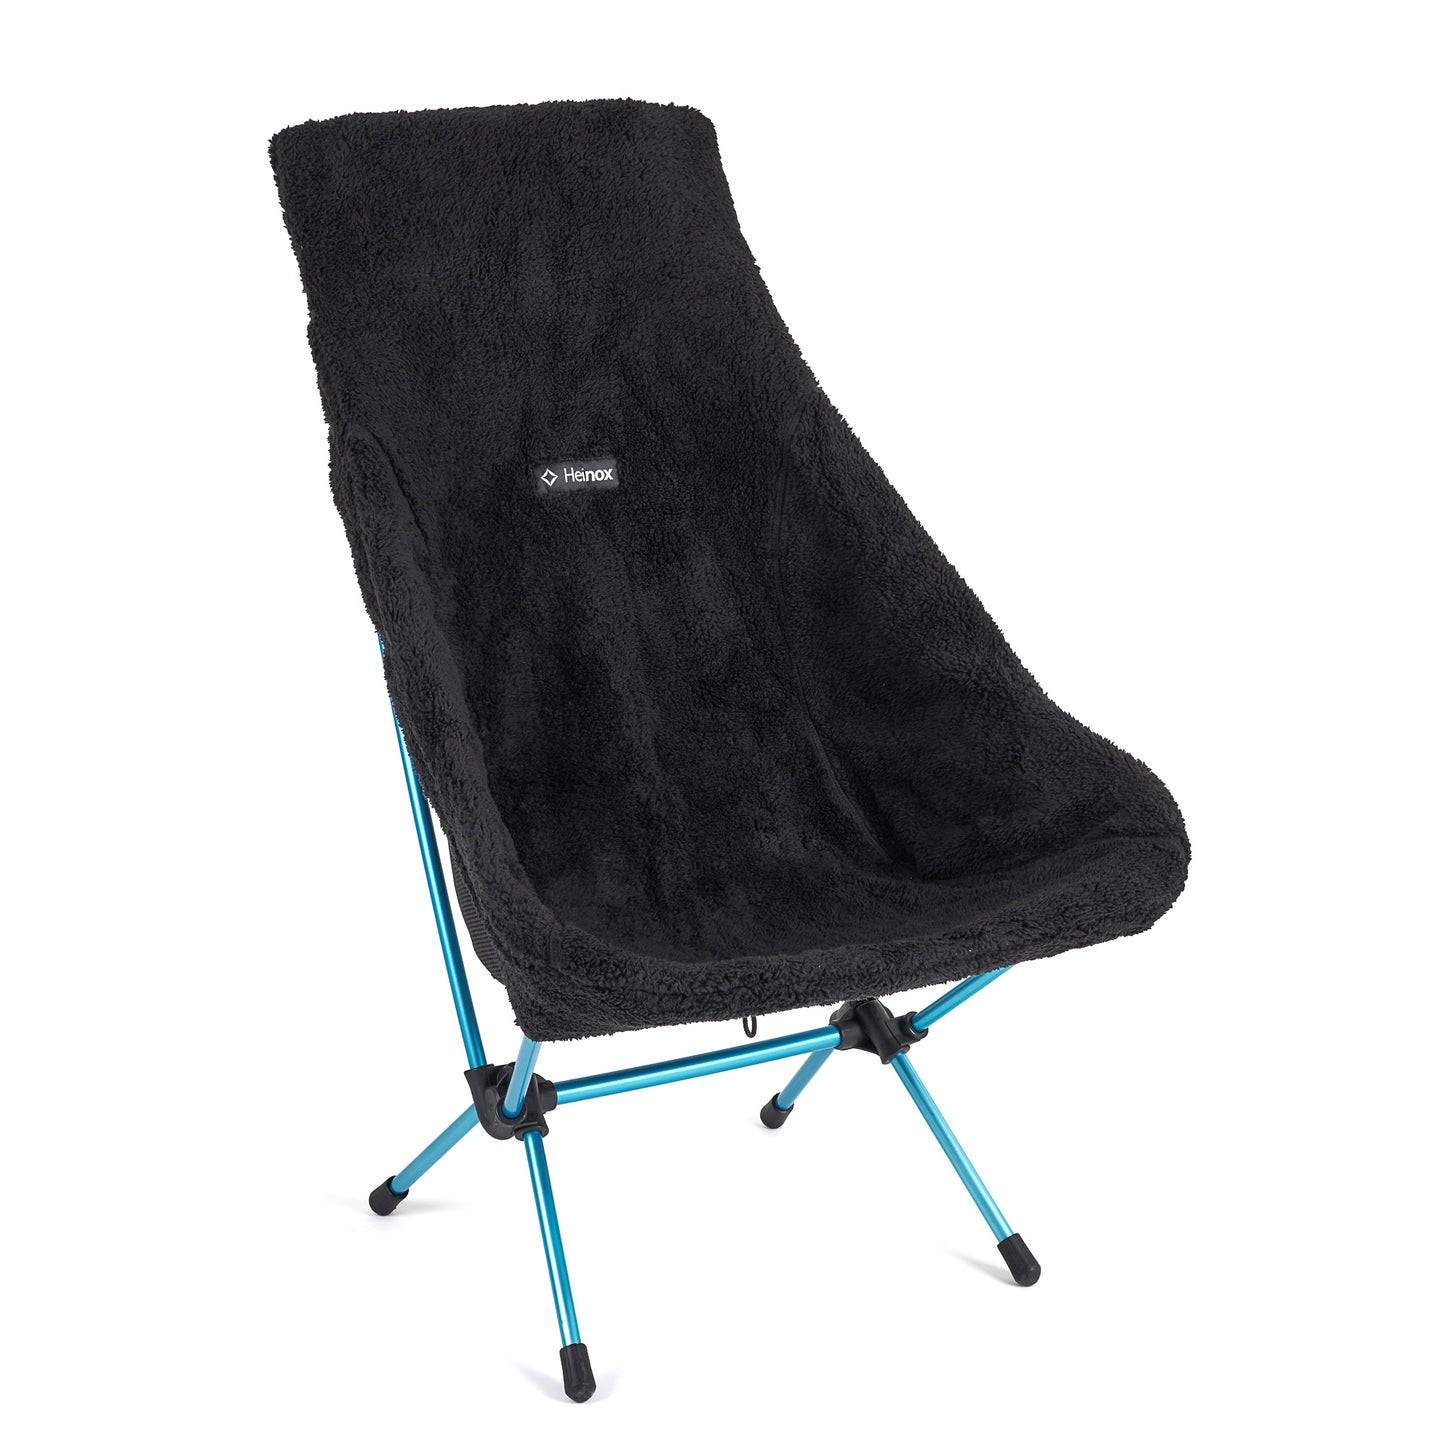 Fleece Seat Warmer for Chair Two - Black